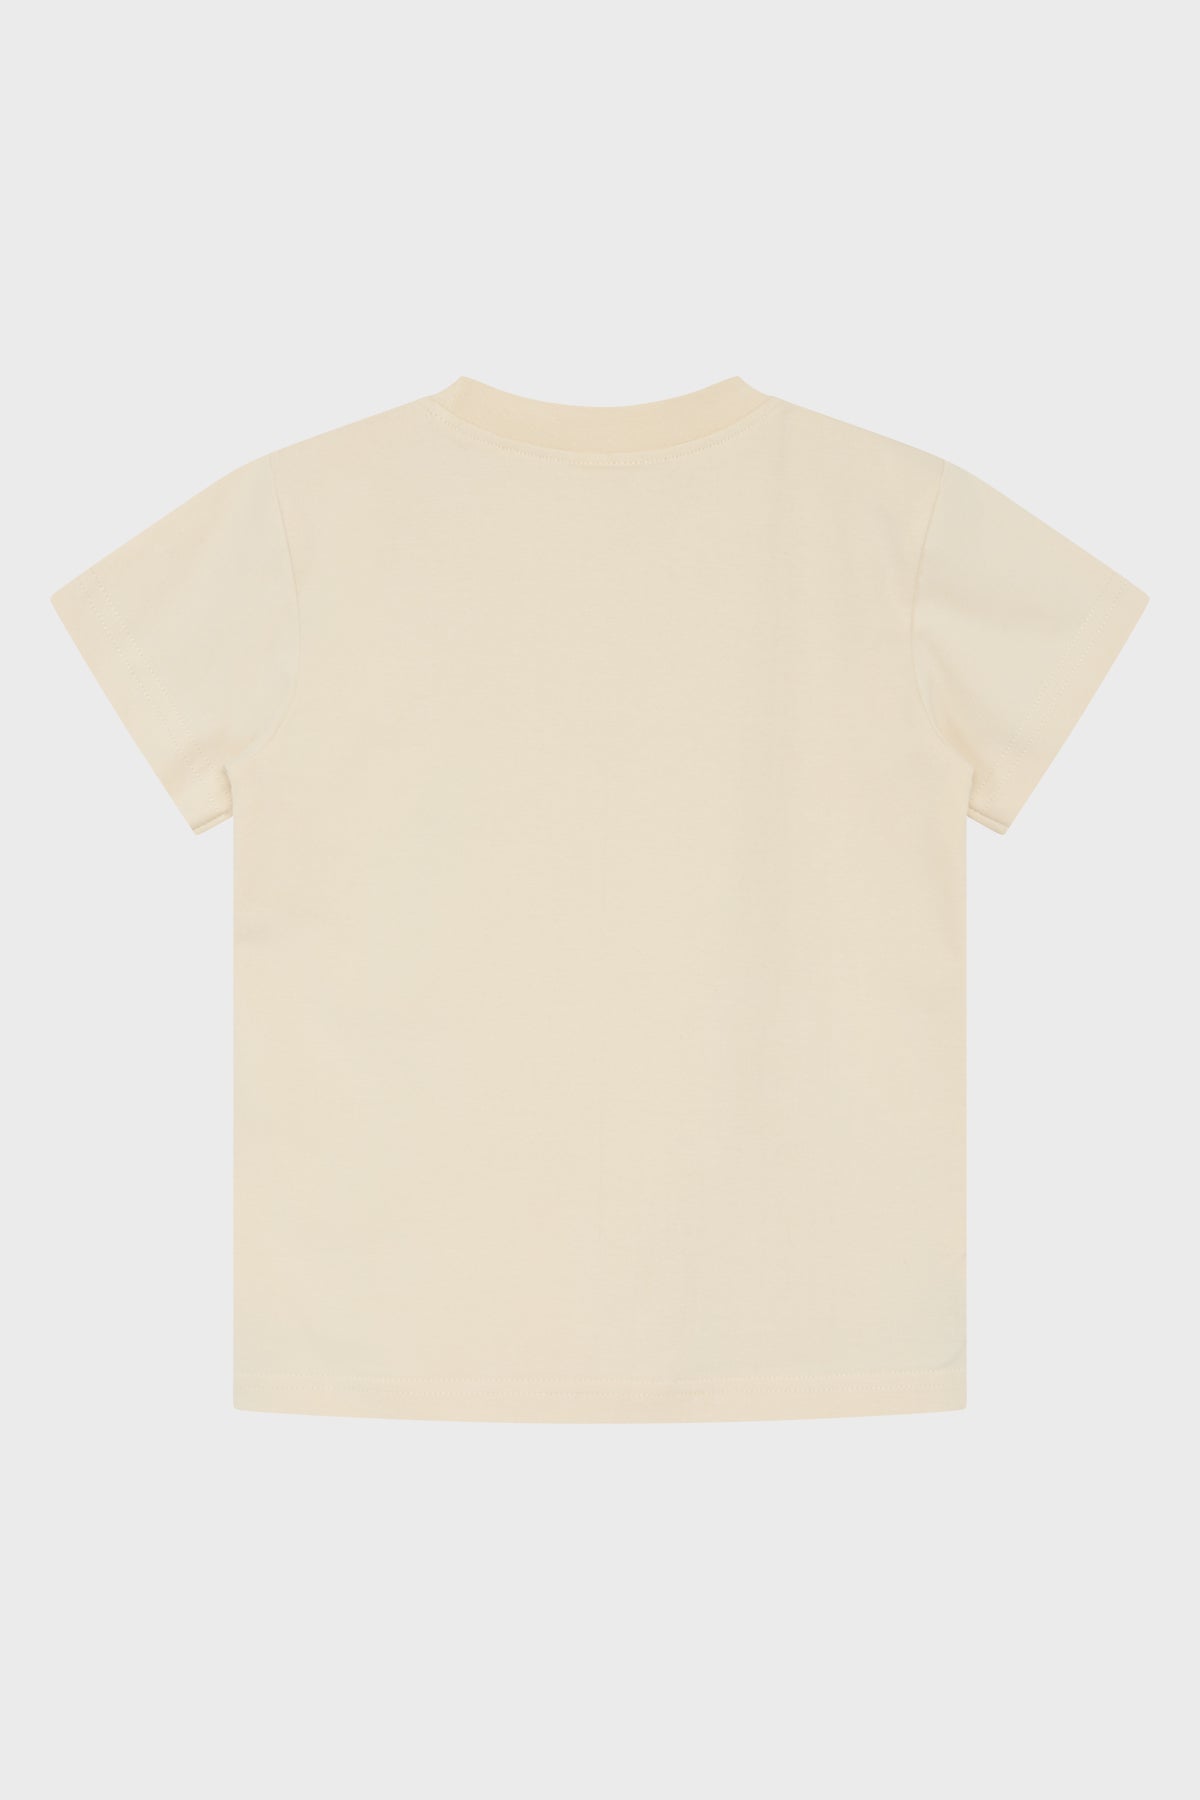 HCArthur - T-shirt Sand 4505